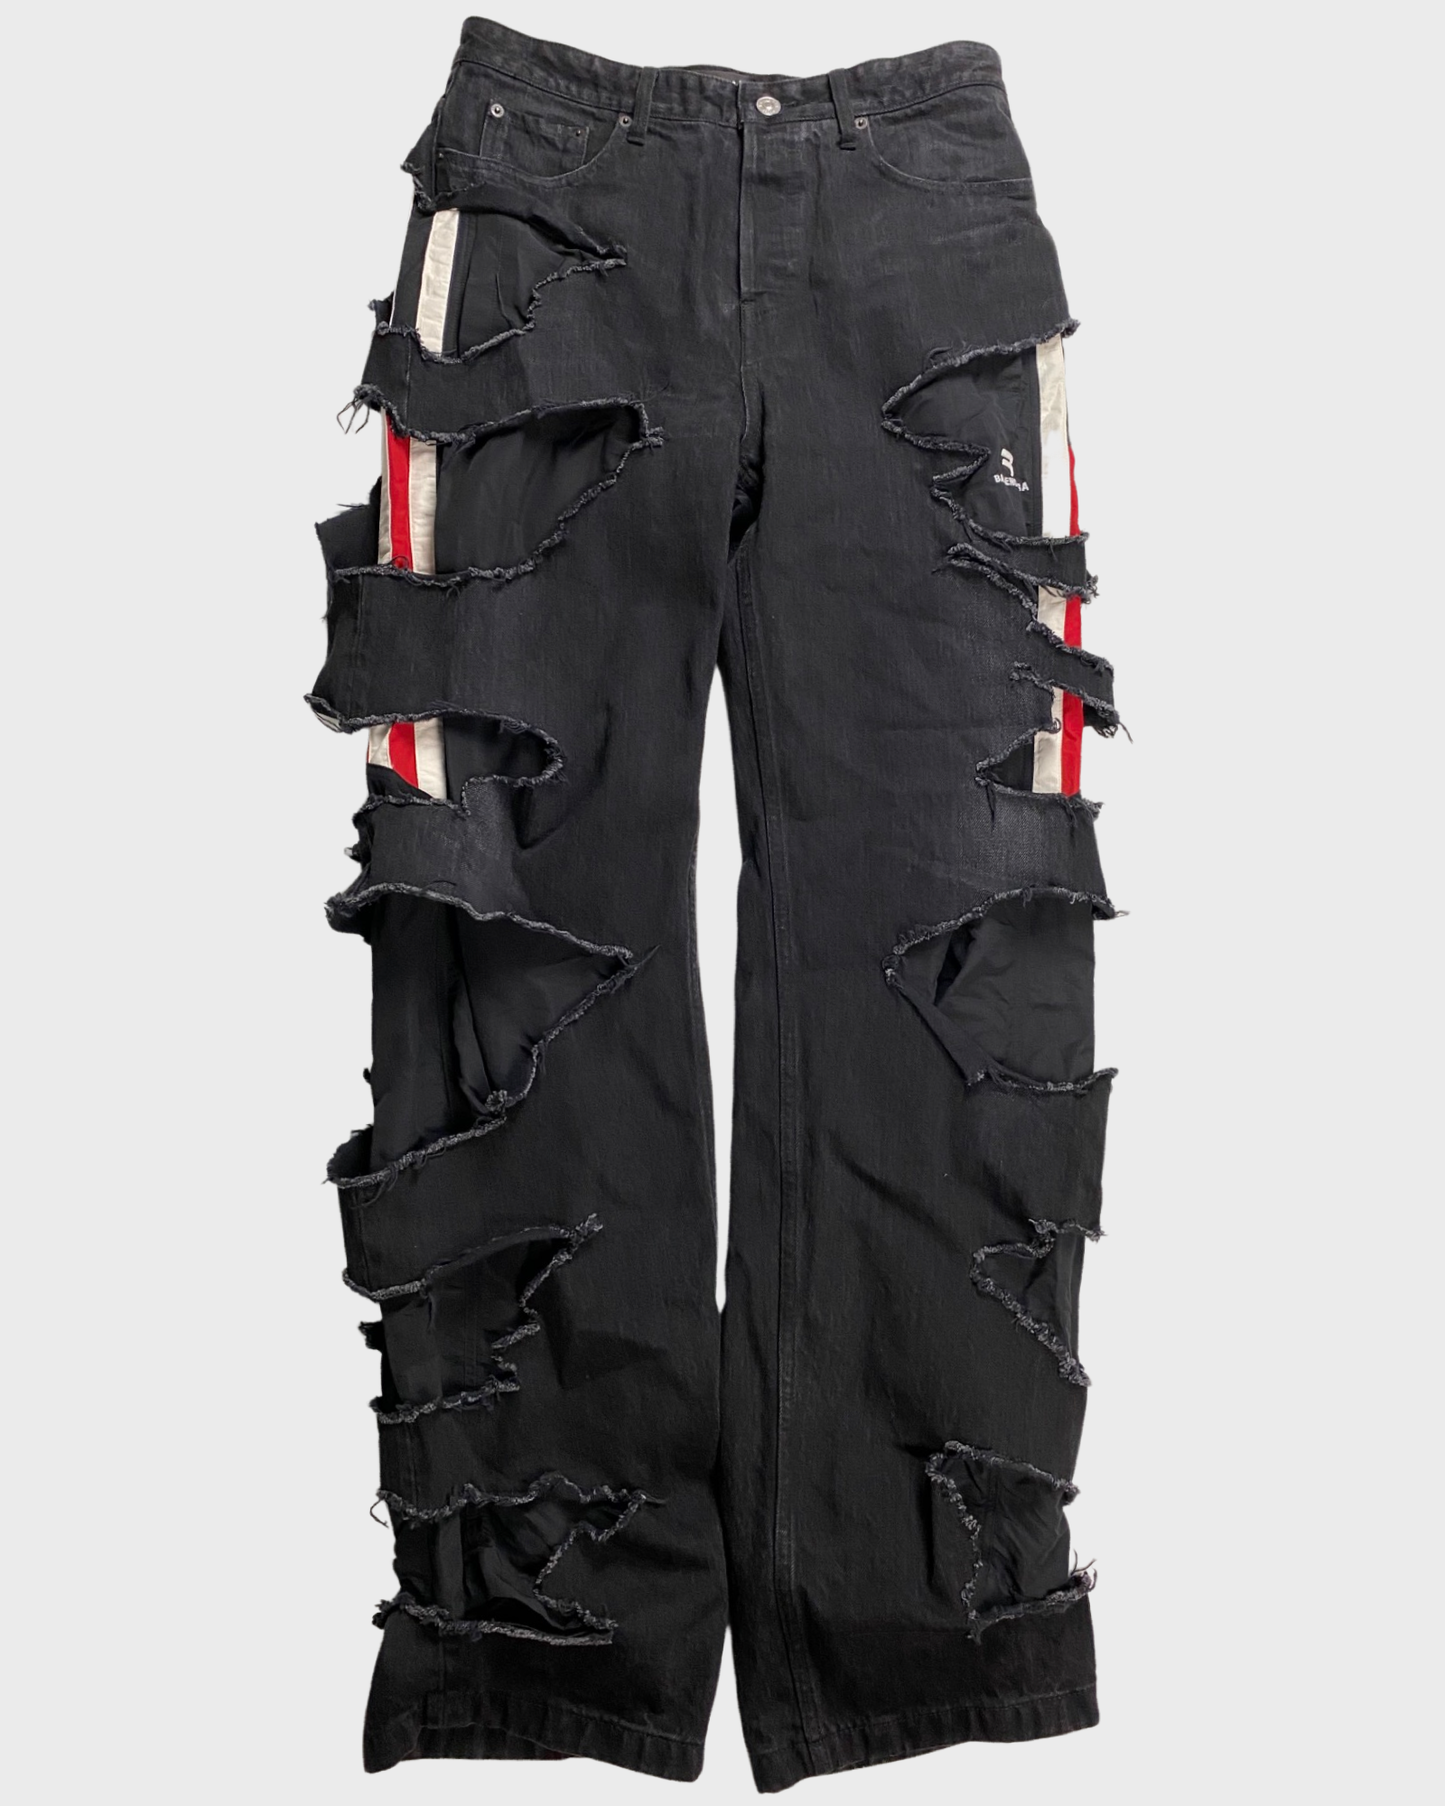 Balenciaga Slashed jeans in black SZ:XS|S